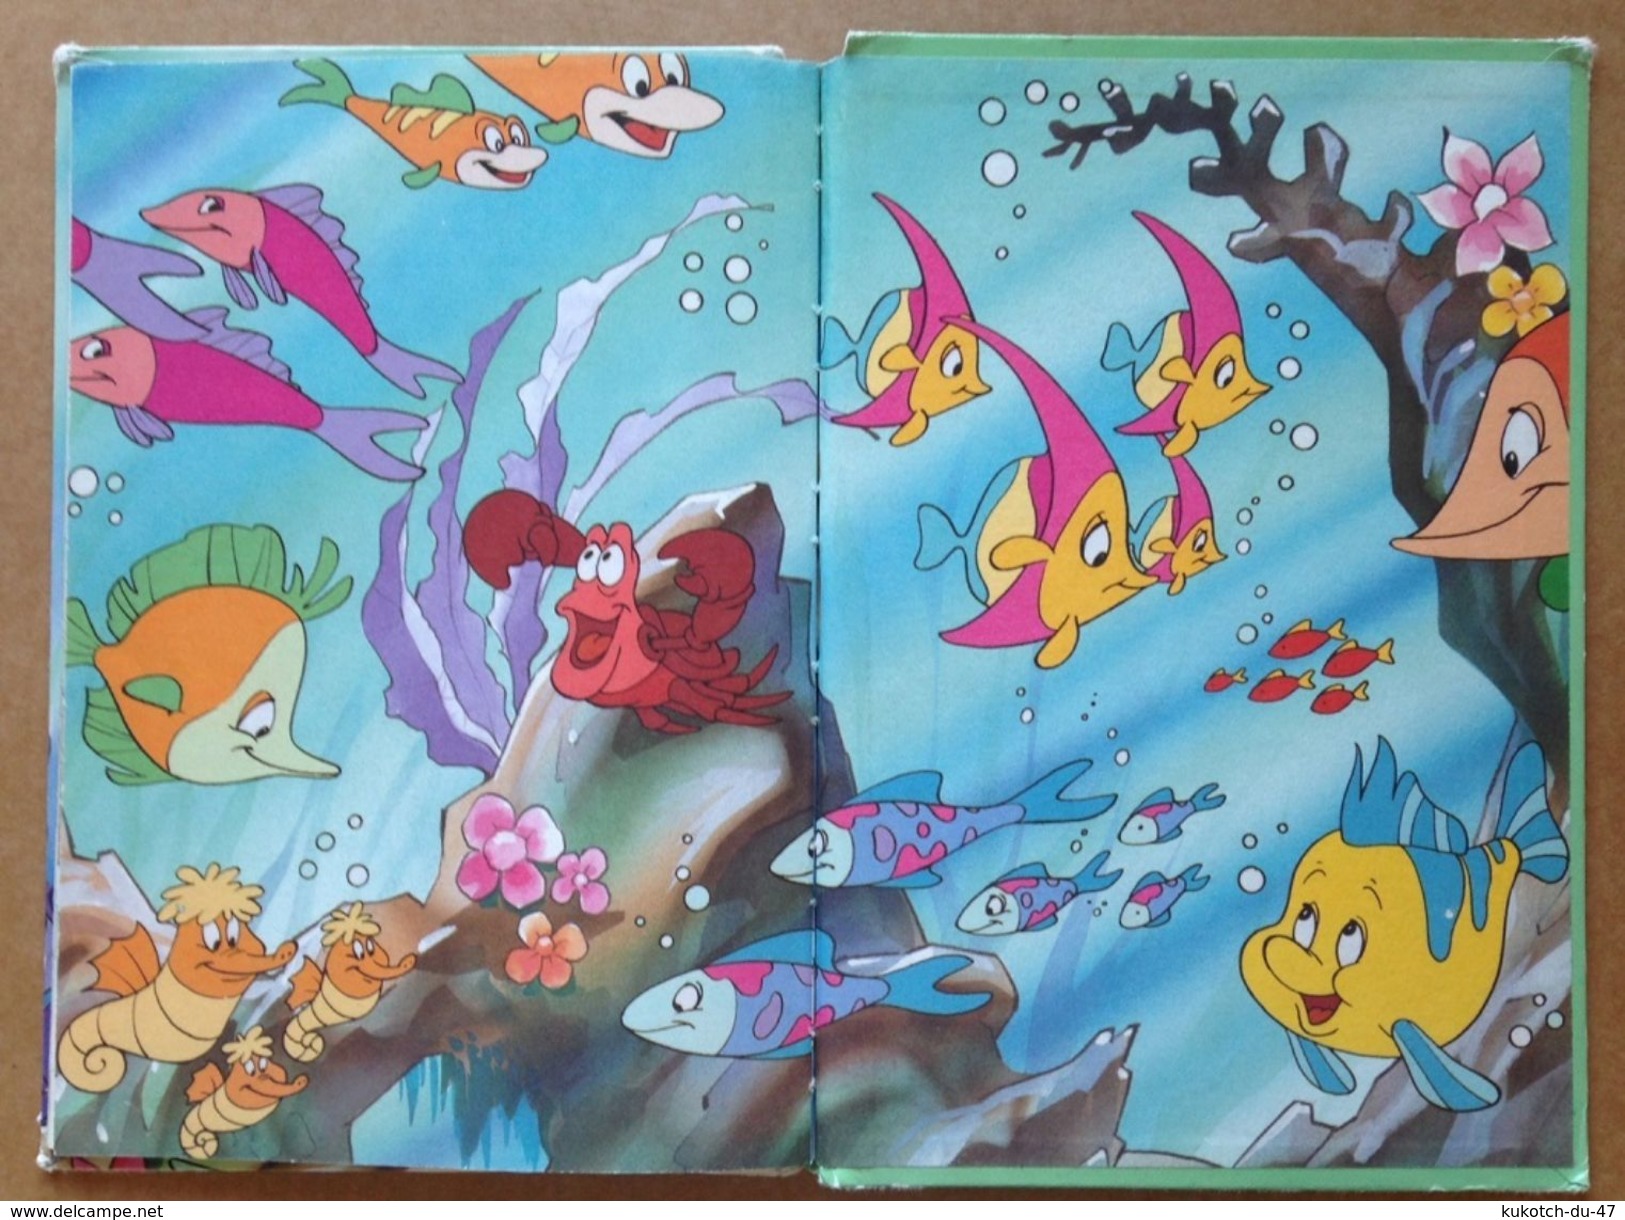 Disney - Mickey Club du livre - La petite sirène (1993)